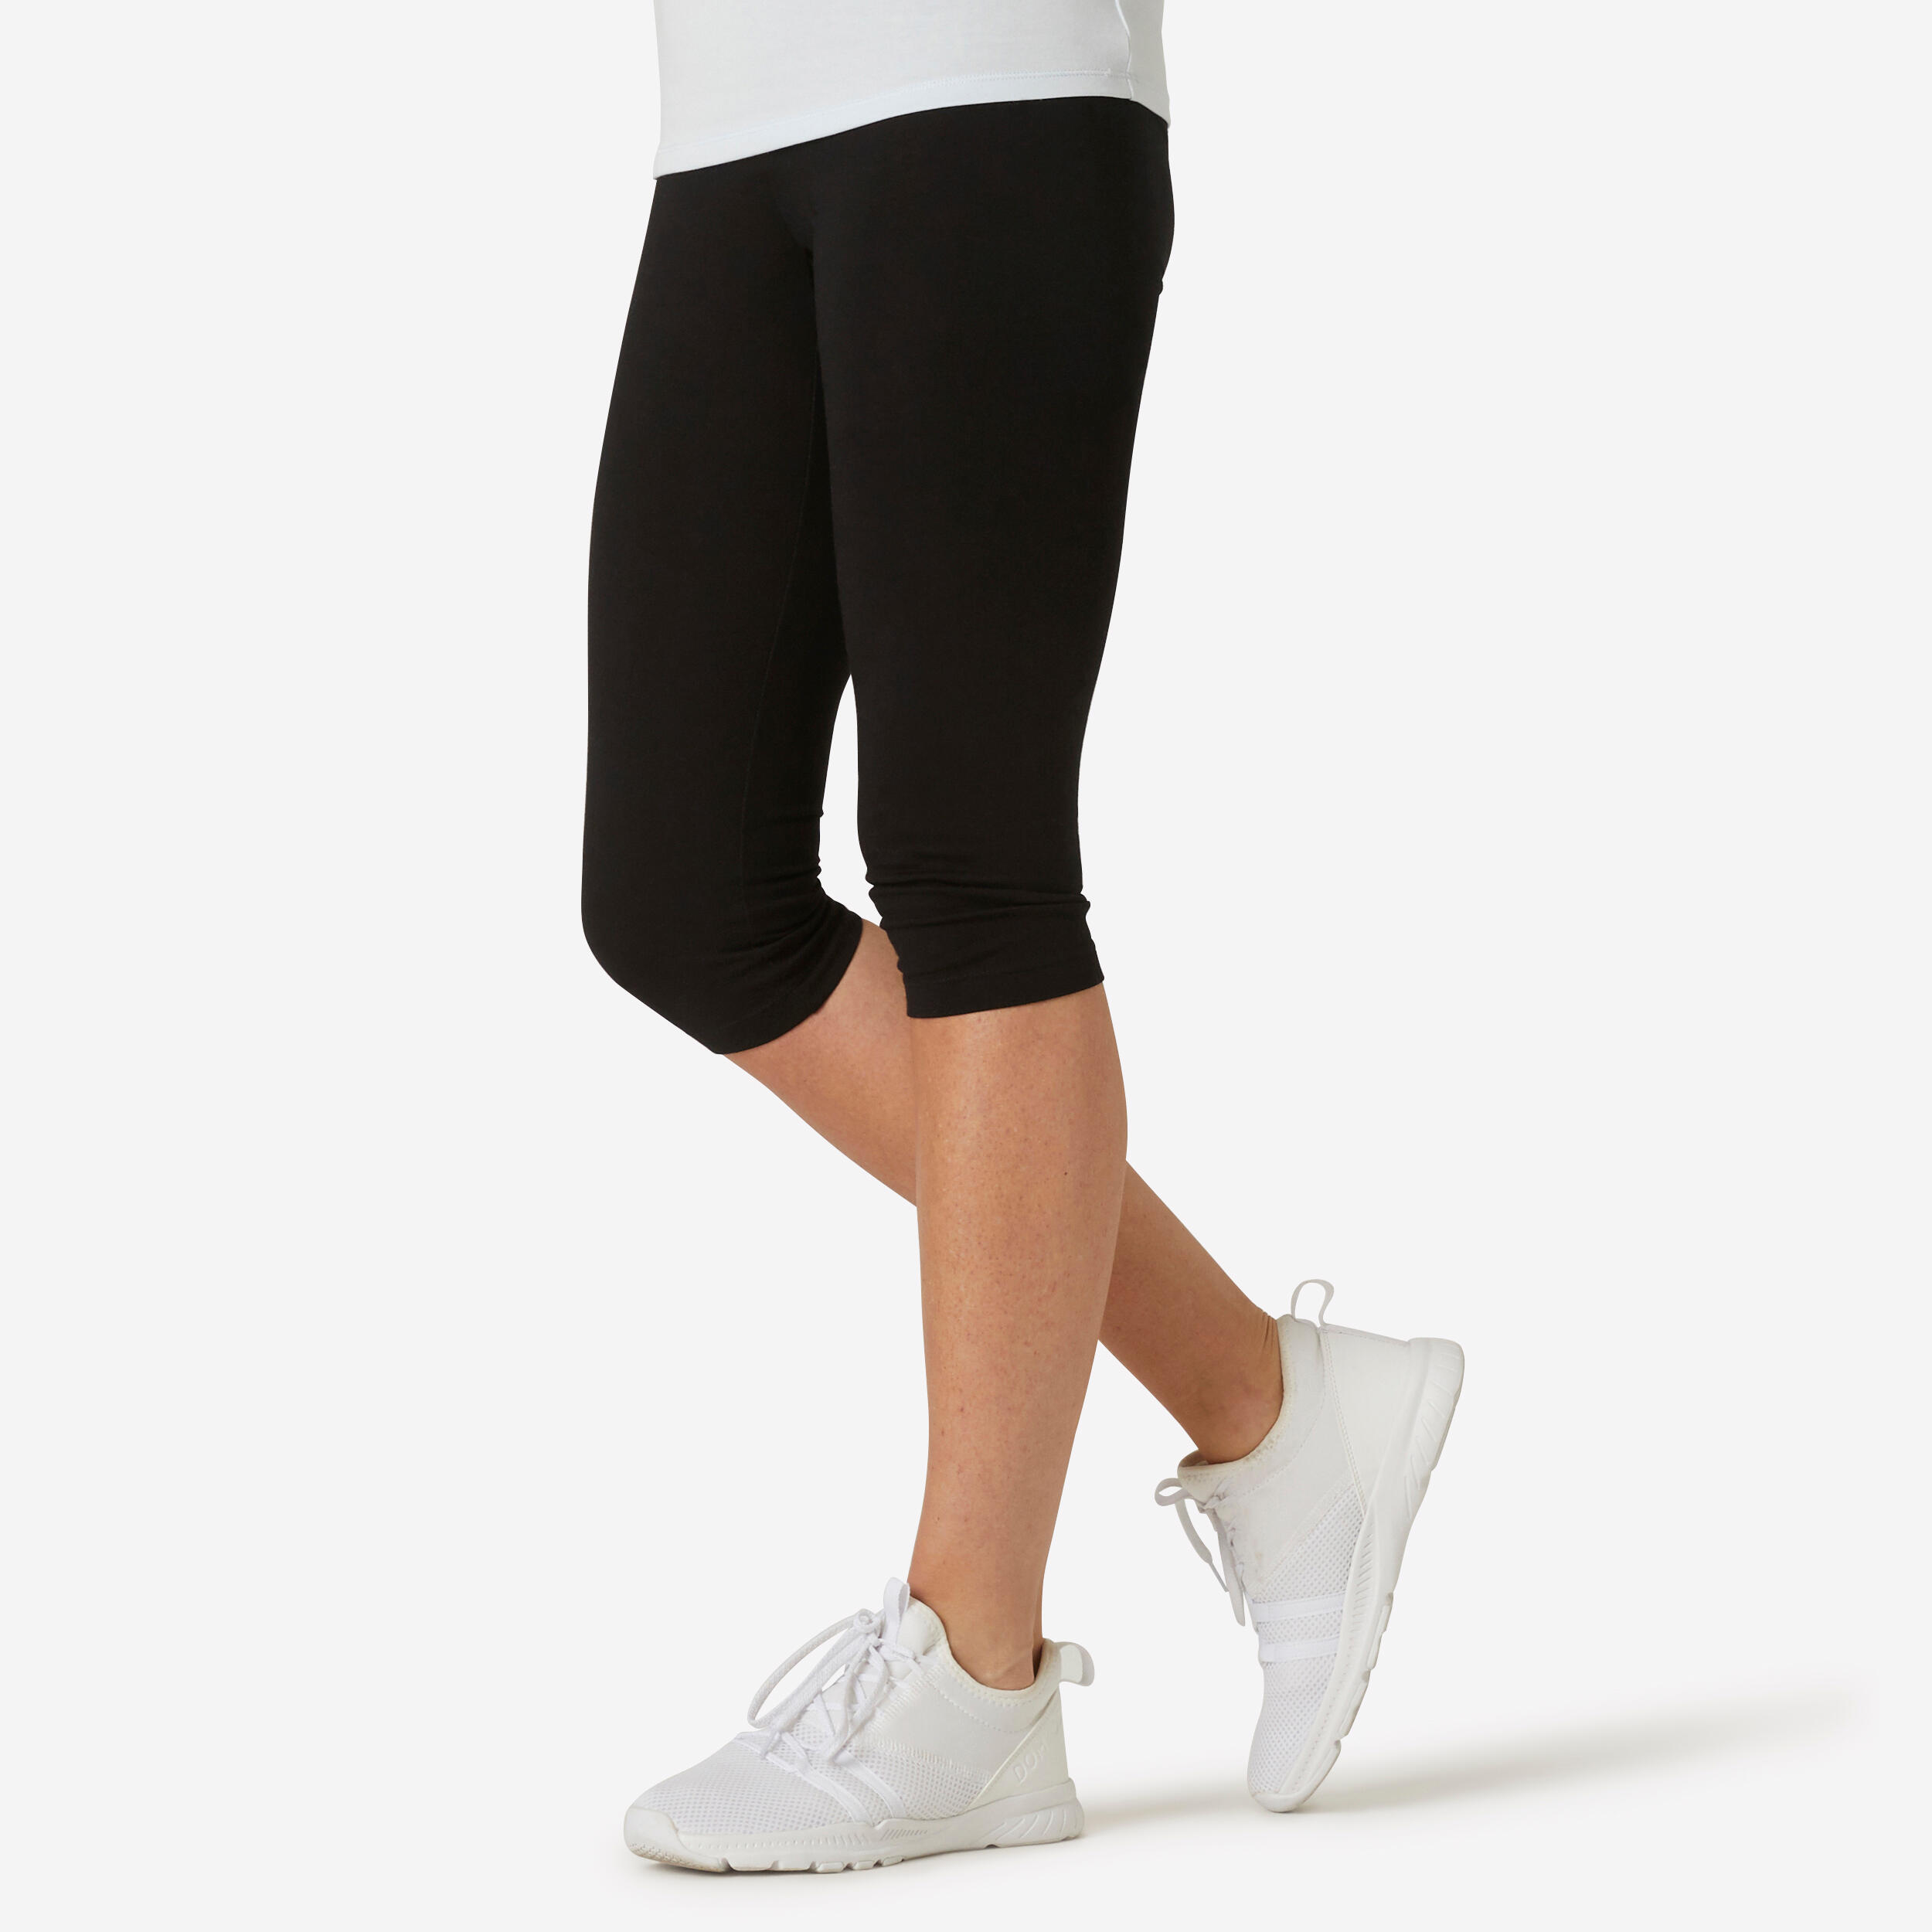 Women’s Fitness Leggings - Fit+ 500 Black - DOMYOS